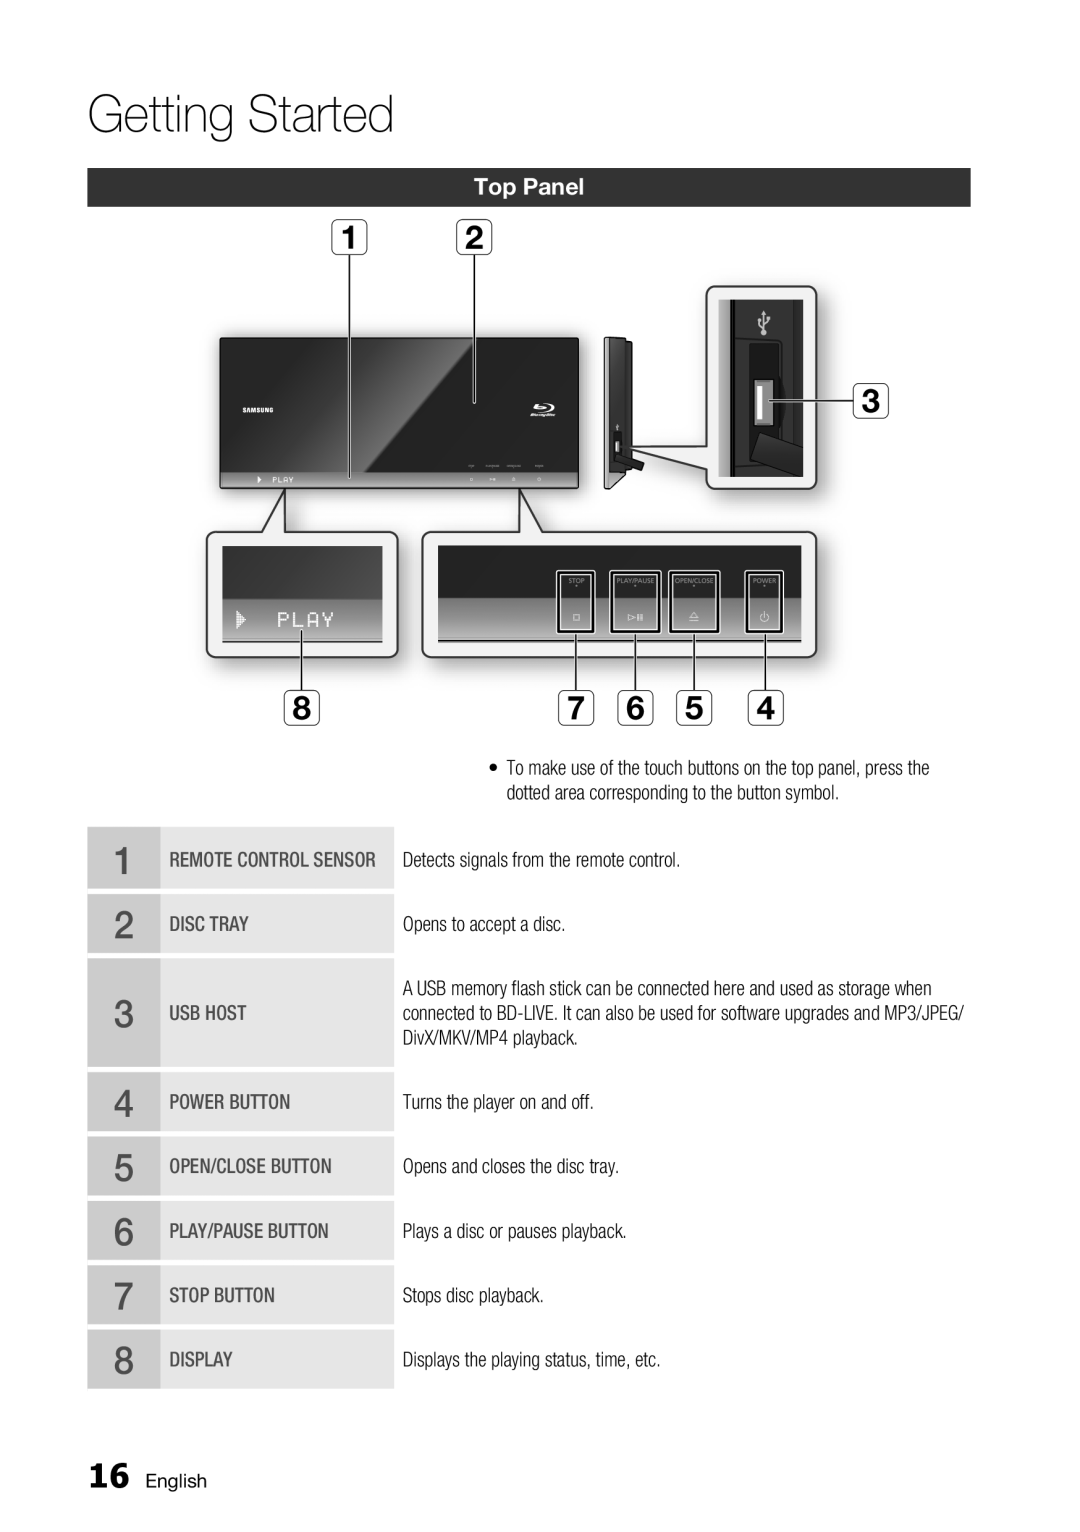 Samsung BD-C7500/XEF a b c, g f e d, Top Panel, Disc Tray, Usb Host, Power Button, Open/Close Button, Play/Pause Button 